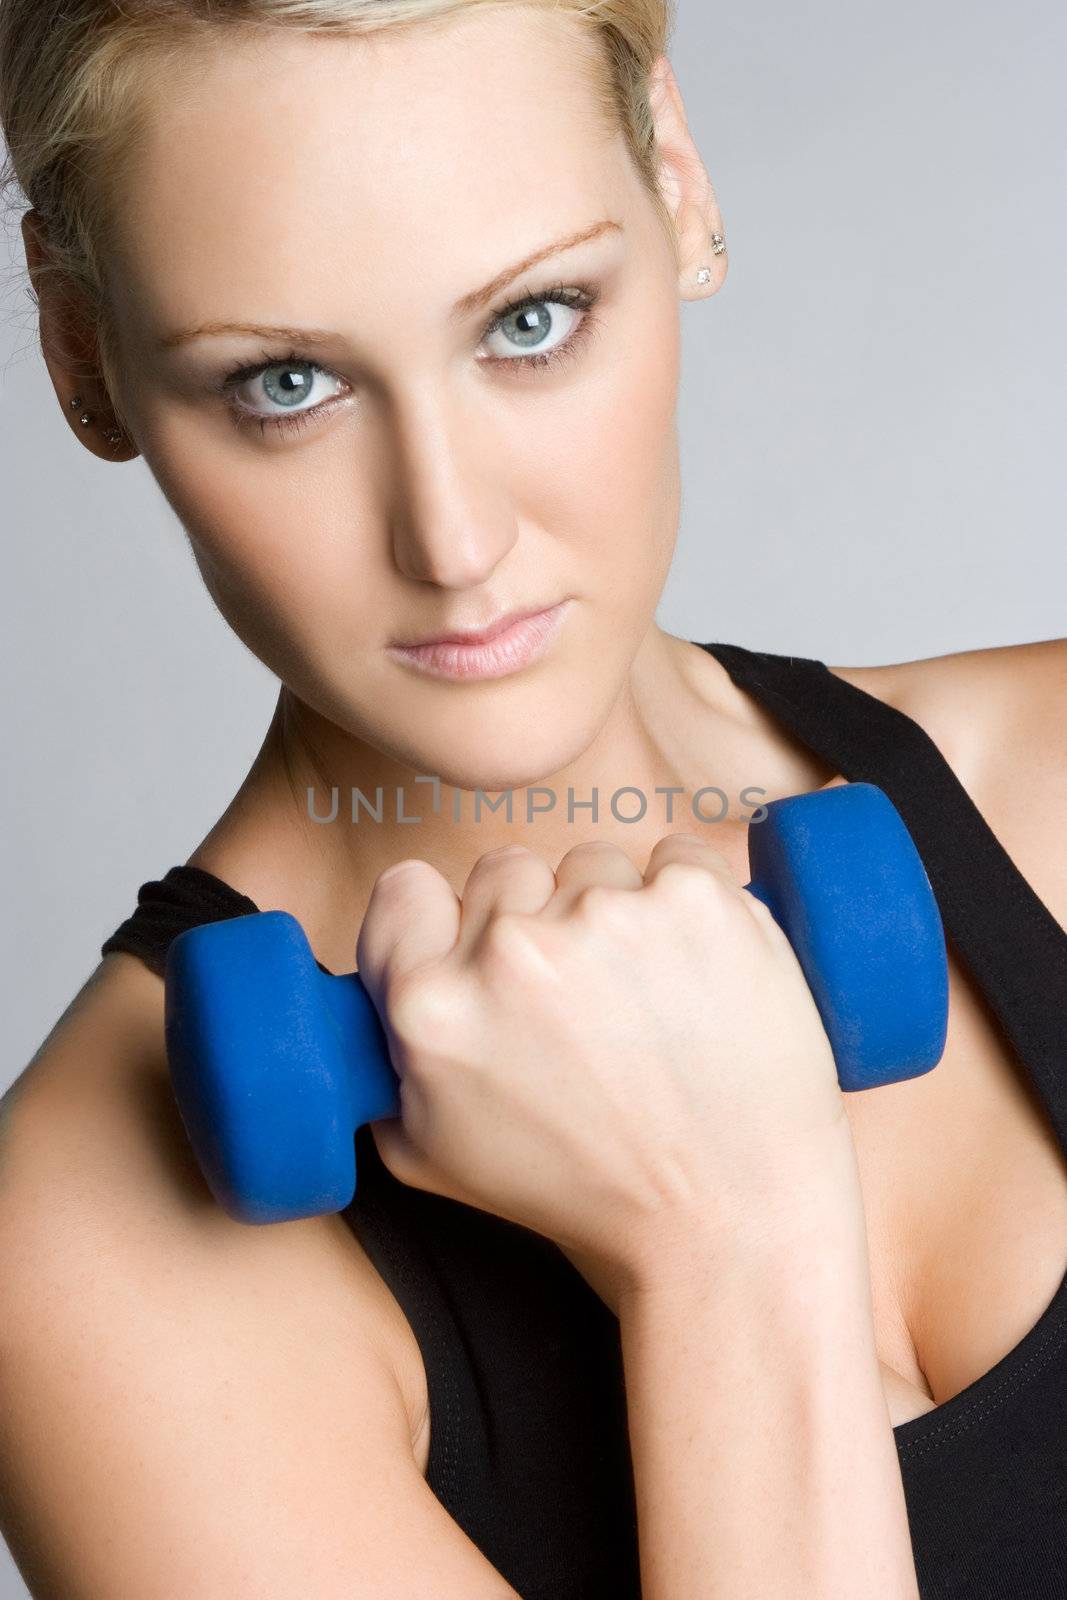 Beautiful fitness woman lifting weights